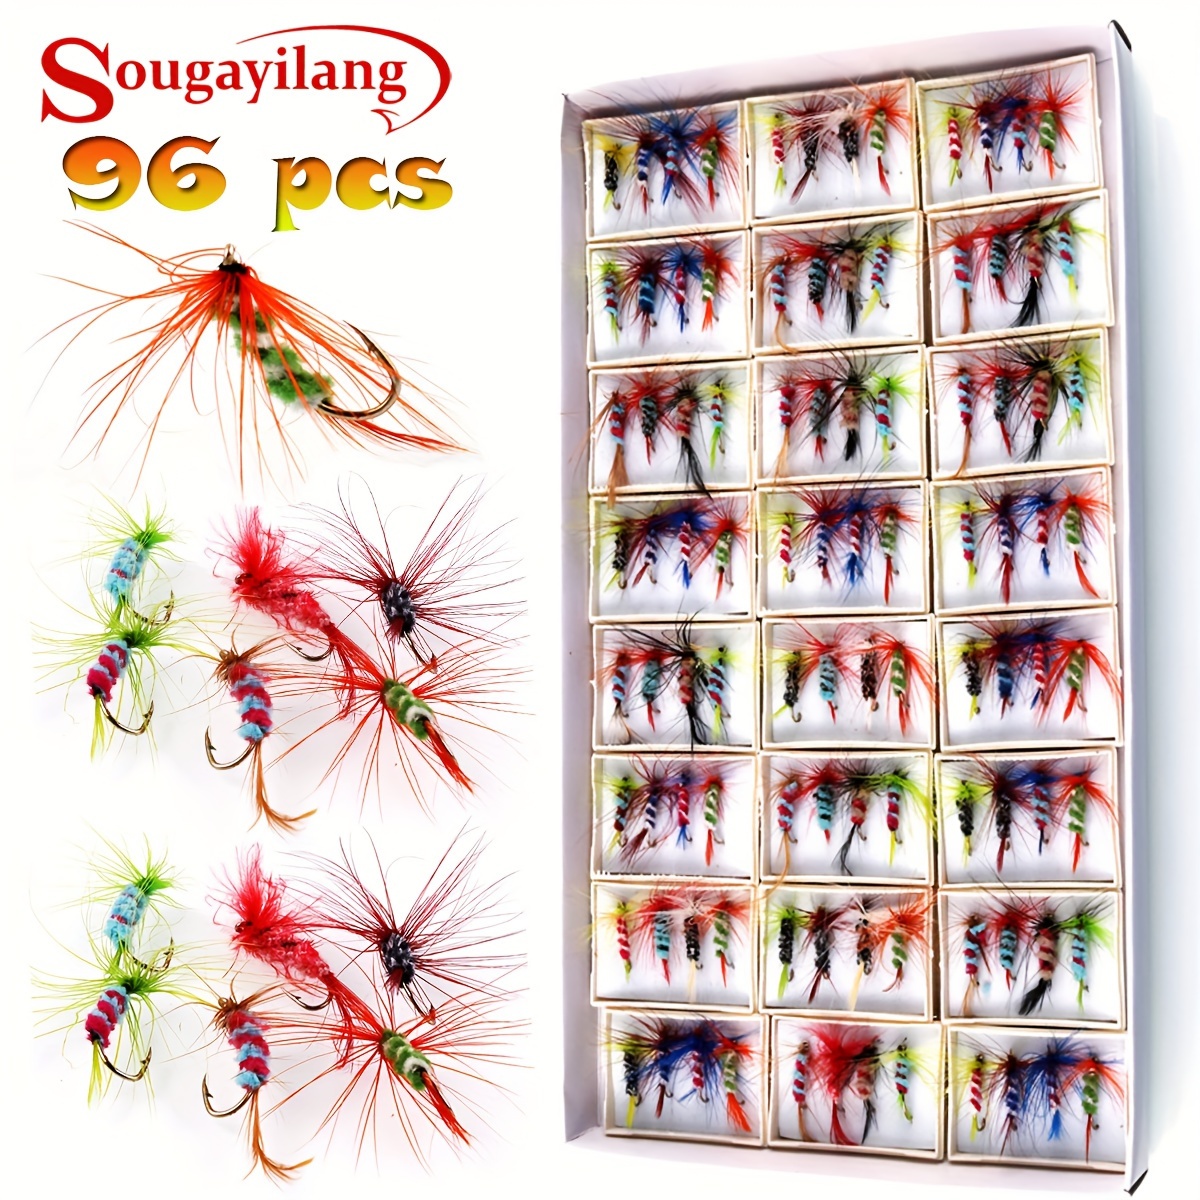 

Sougayilang 96pcs Fishing Set, Dry Fly, Scud, Nymph For Trout, Grayling, Panfish, Carp Lures (random Color)